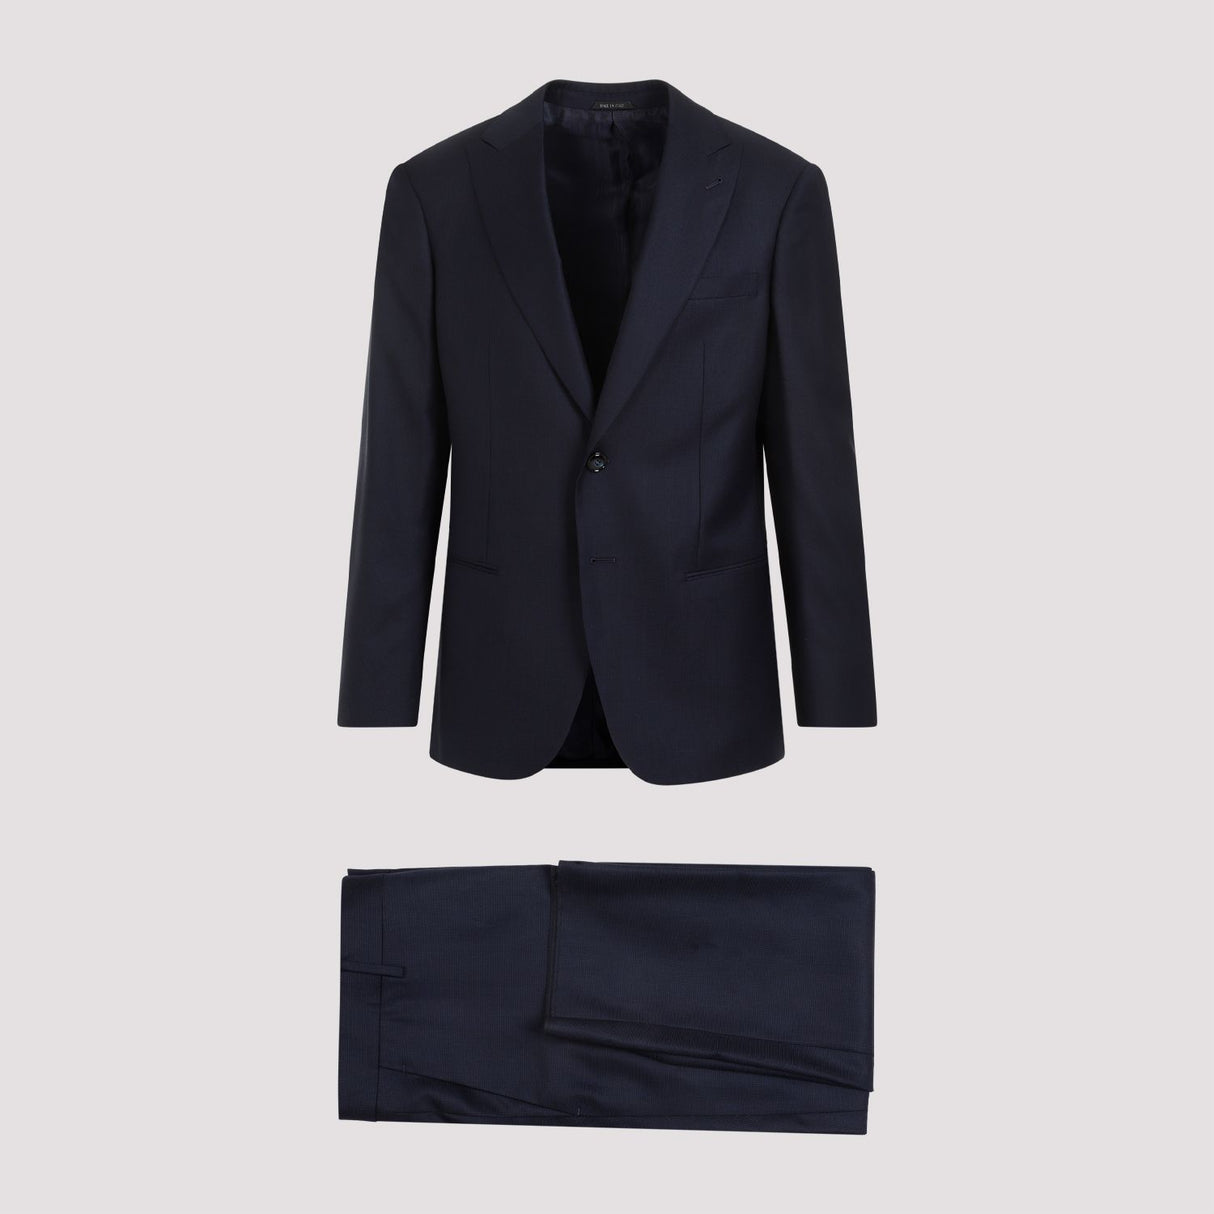 GIORGIO ARMANI Blue Wool Suit for Men